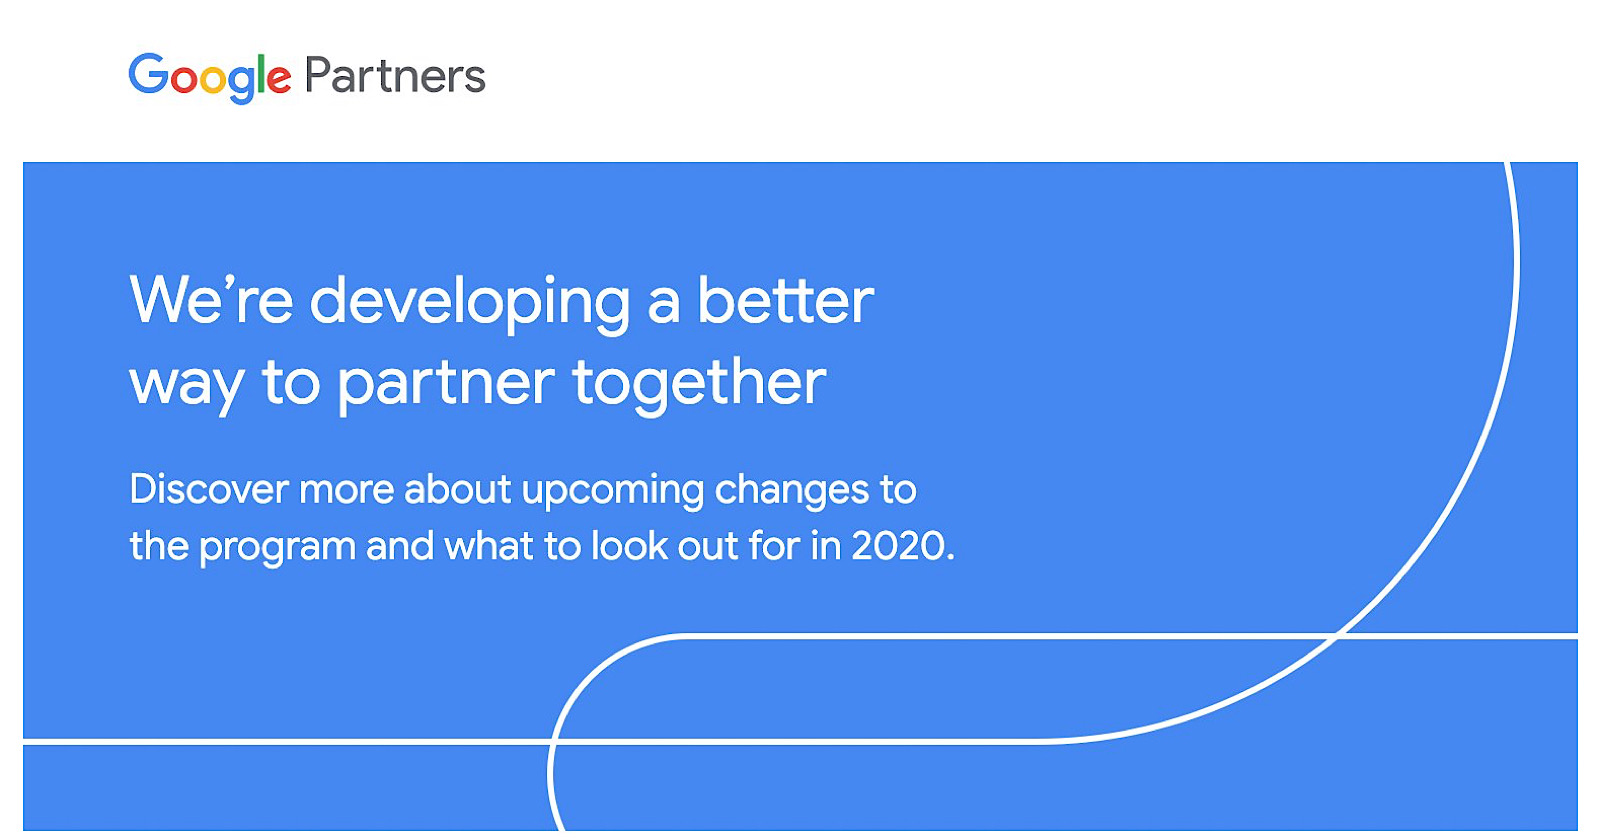 Google Partners changes